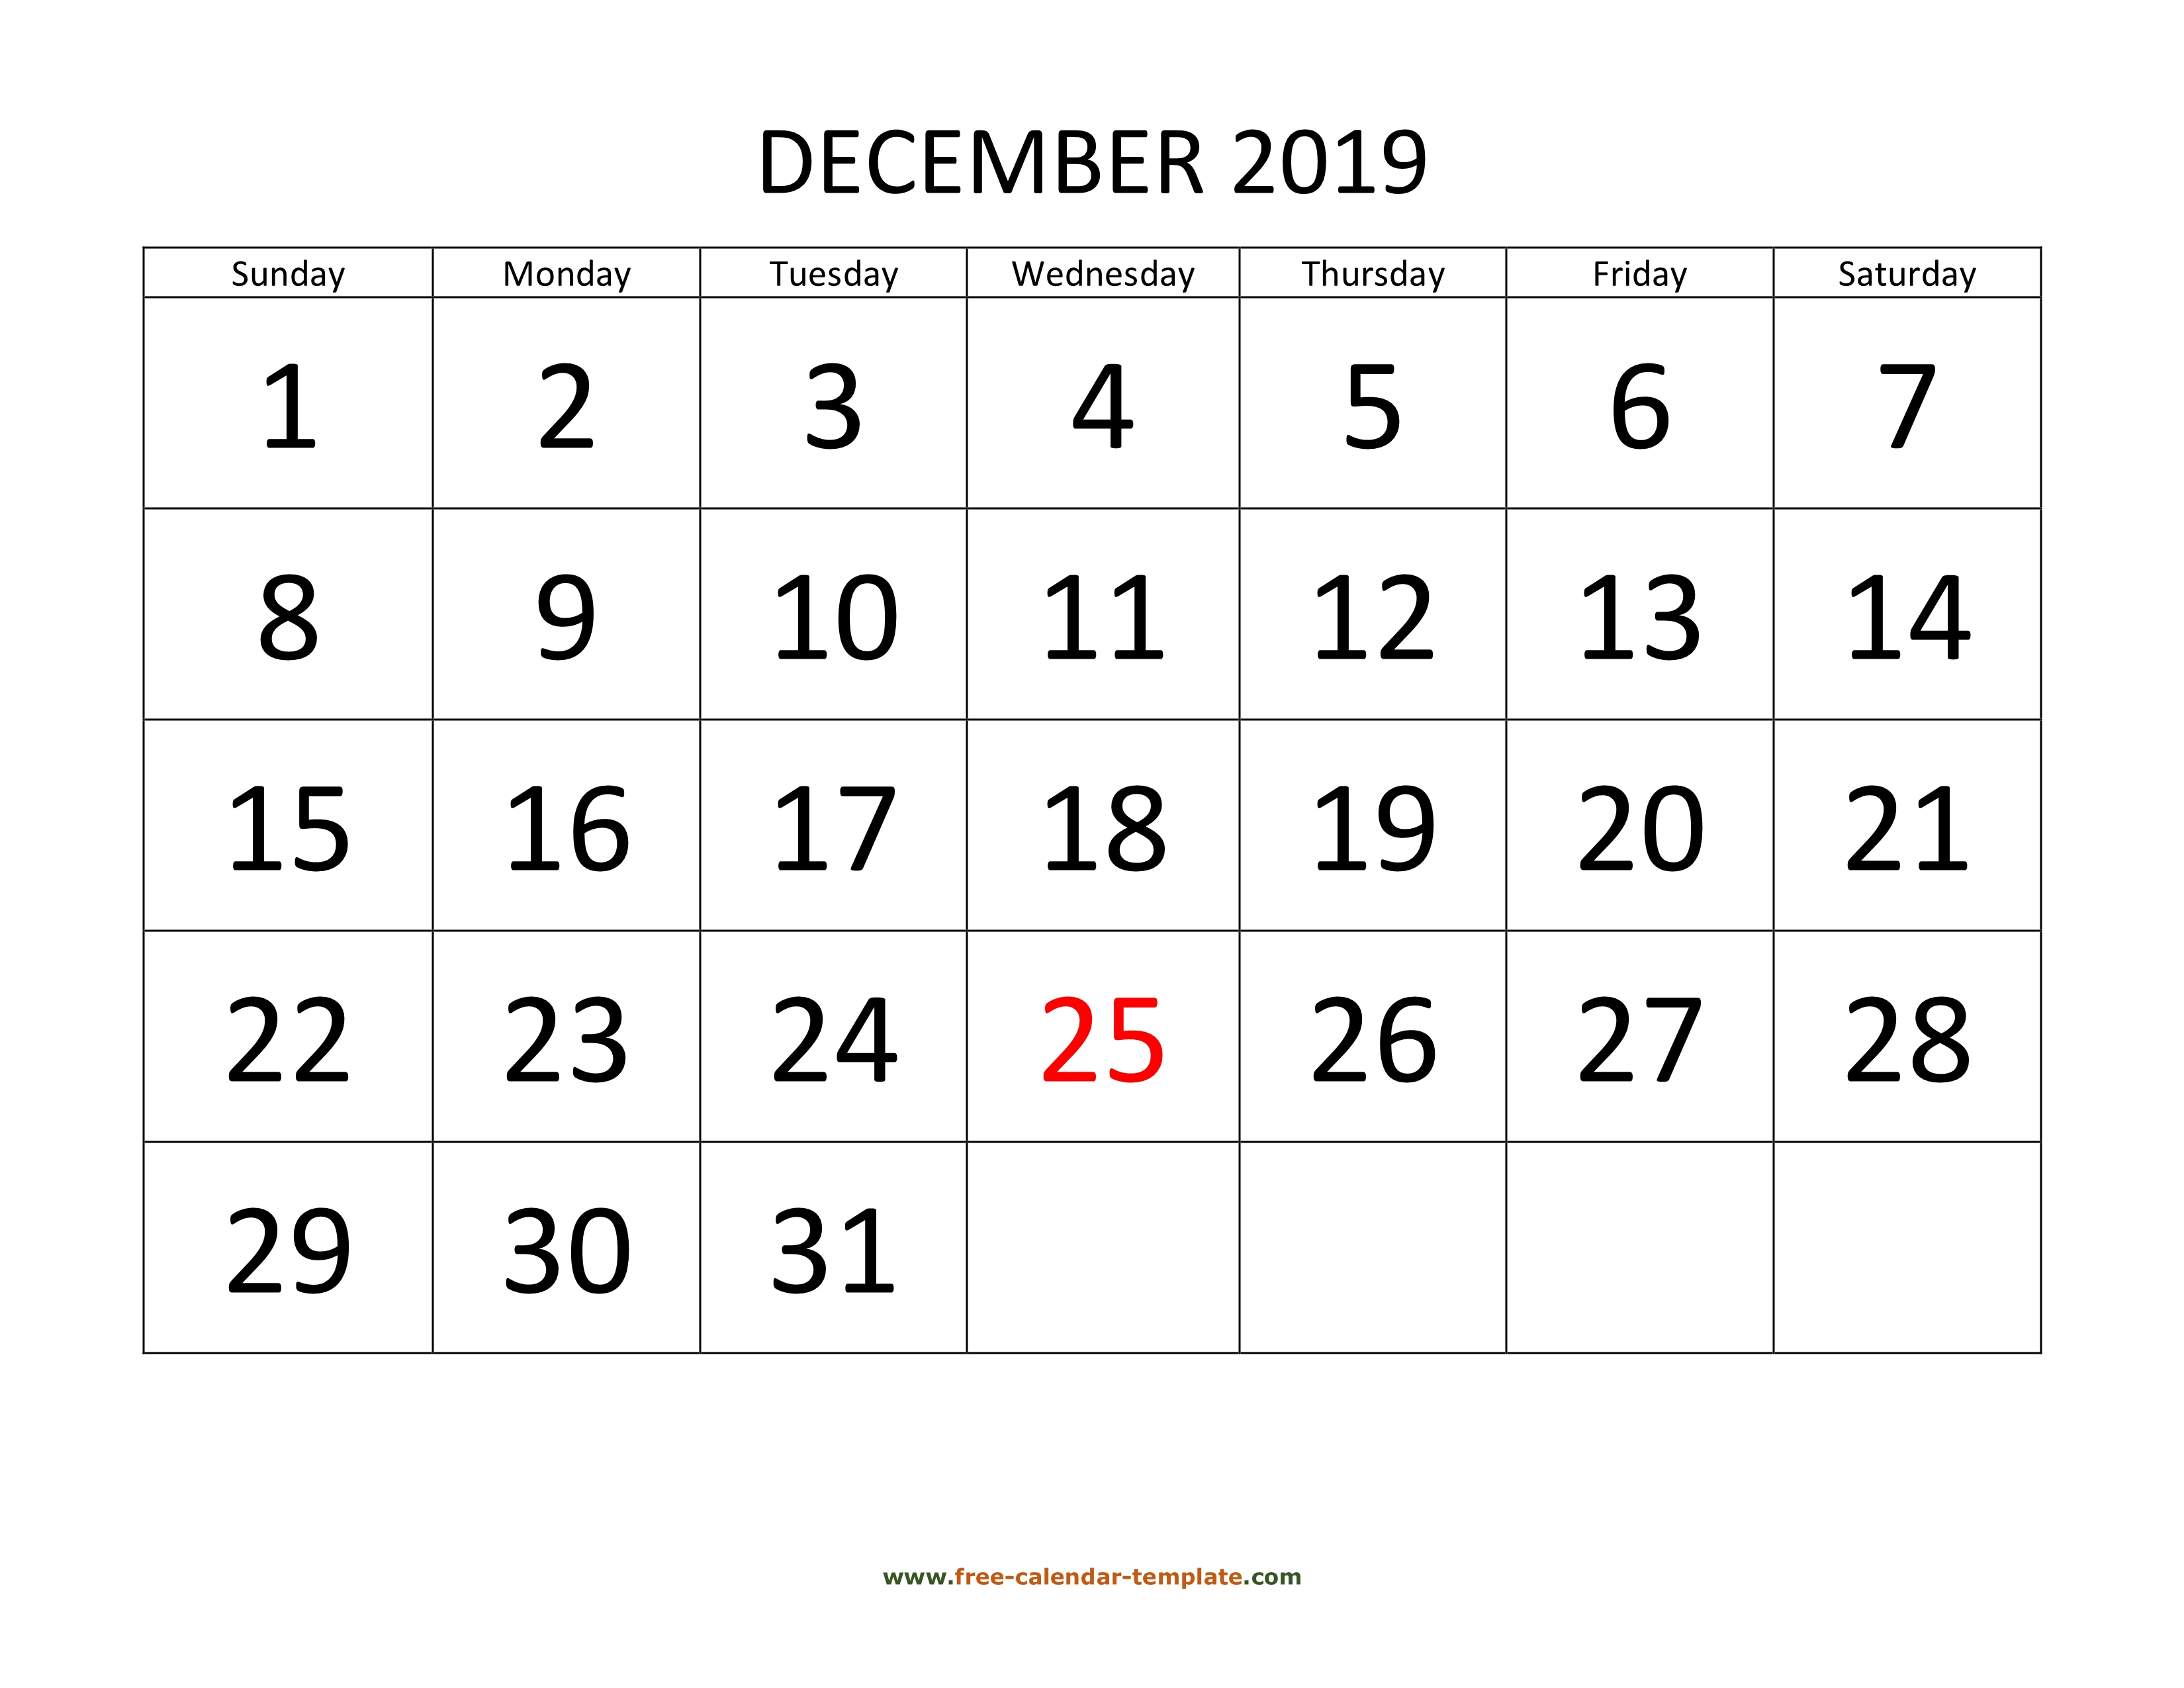 December 2019 Free Calendar Tempplate | Freecalendar intended for Large Grid Calendar Printable